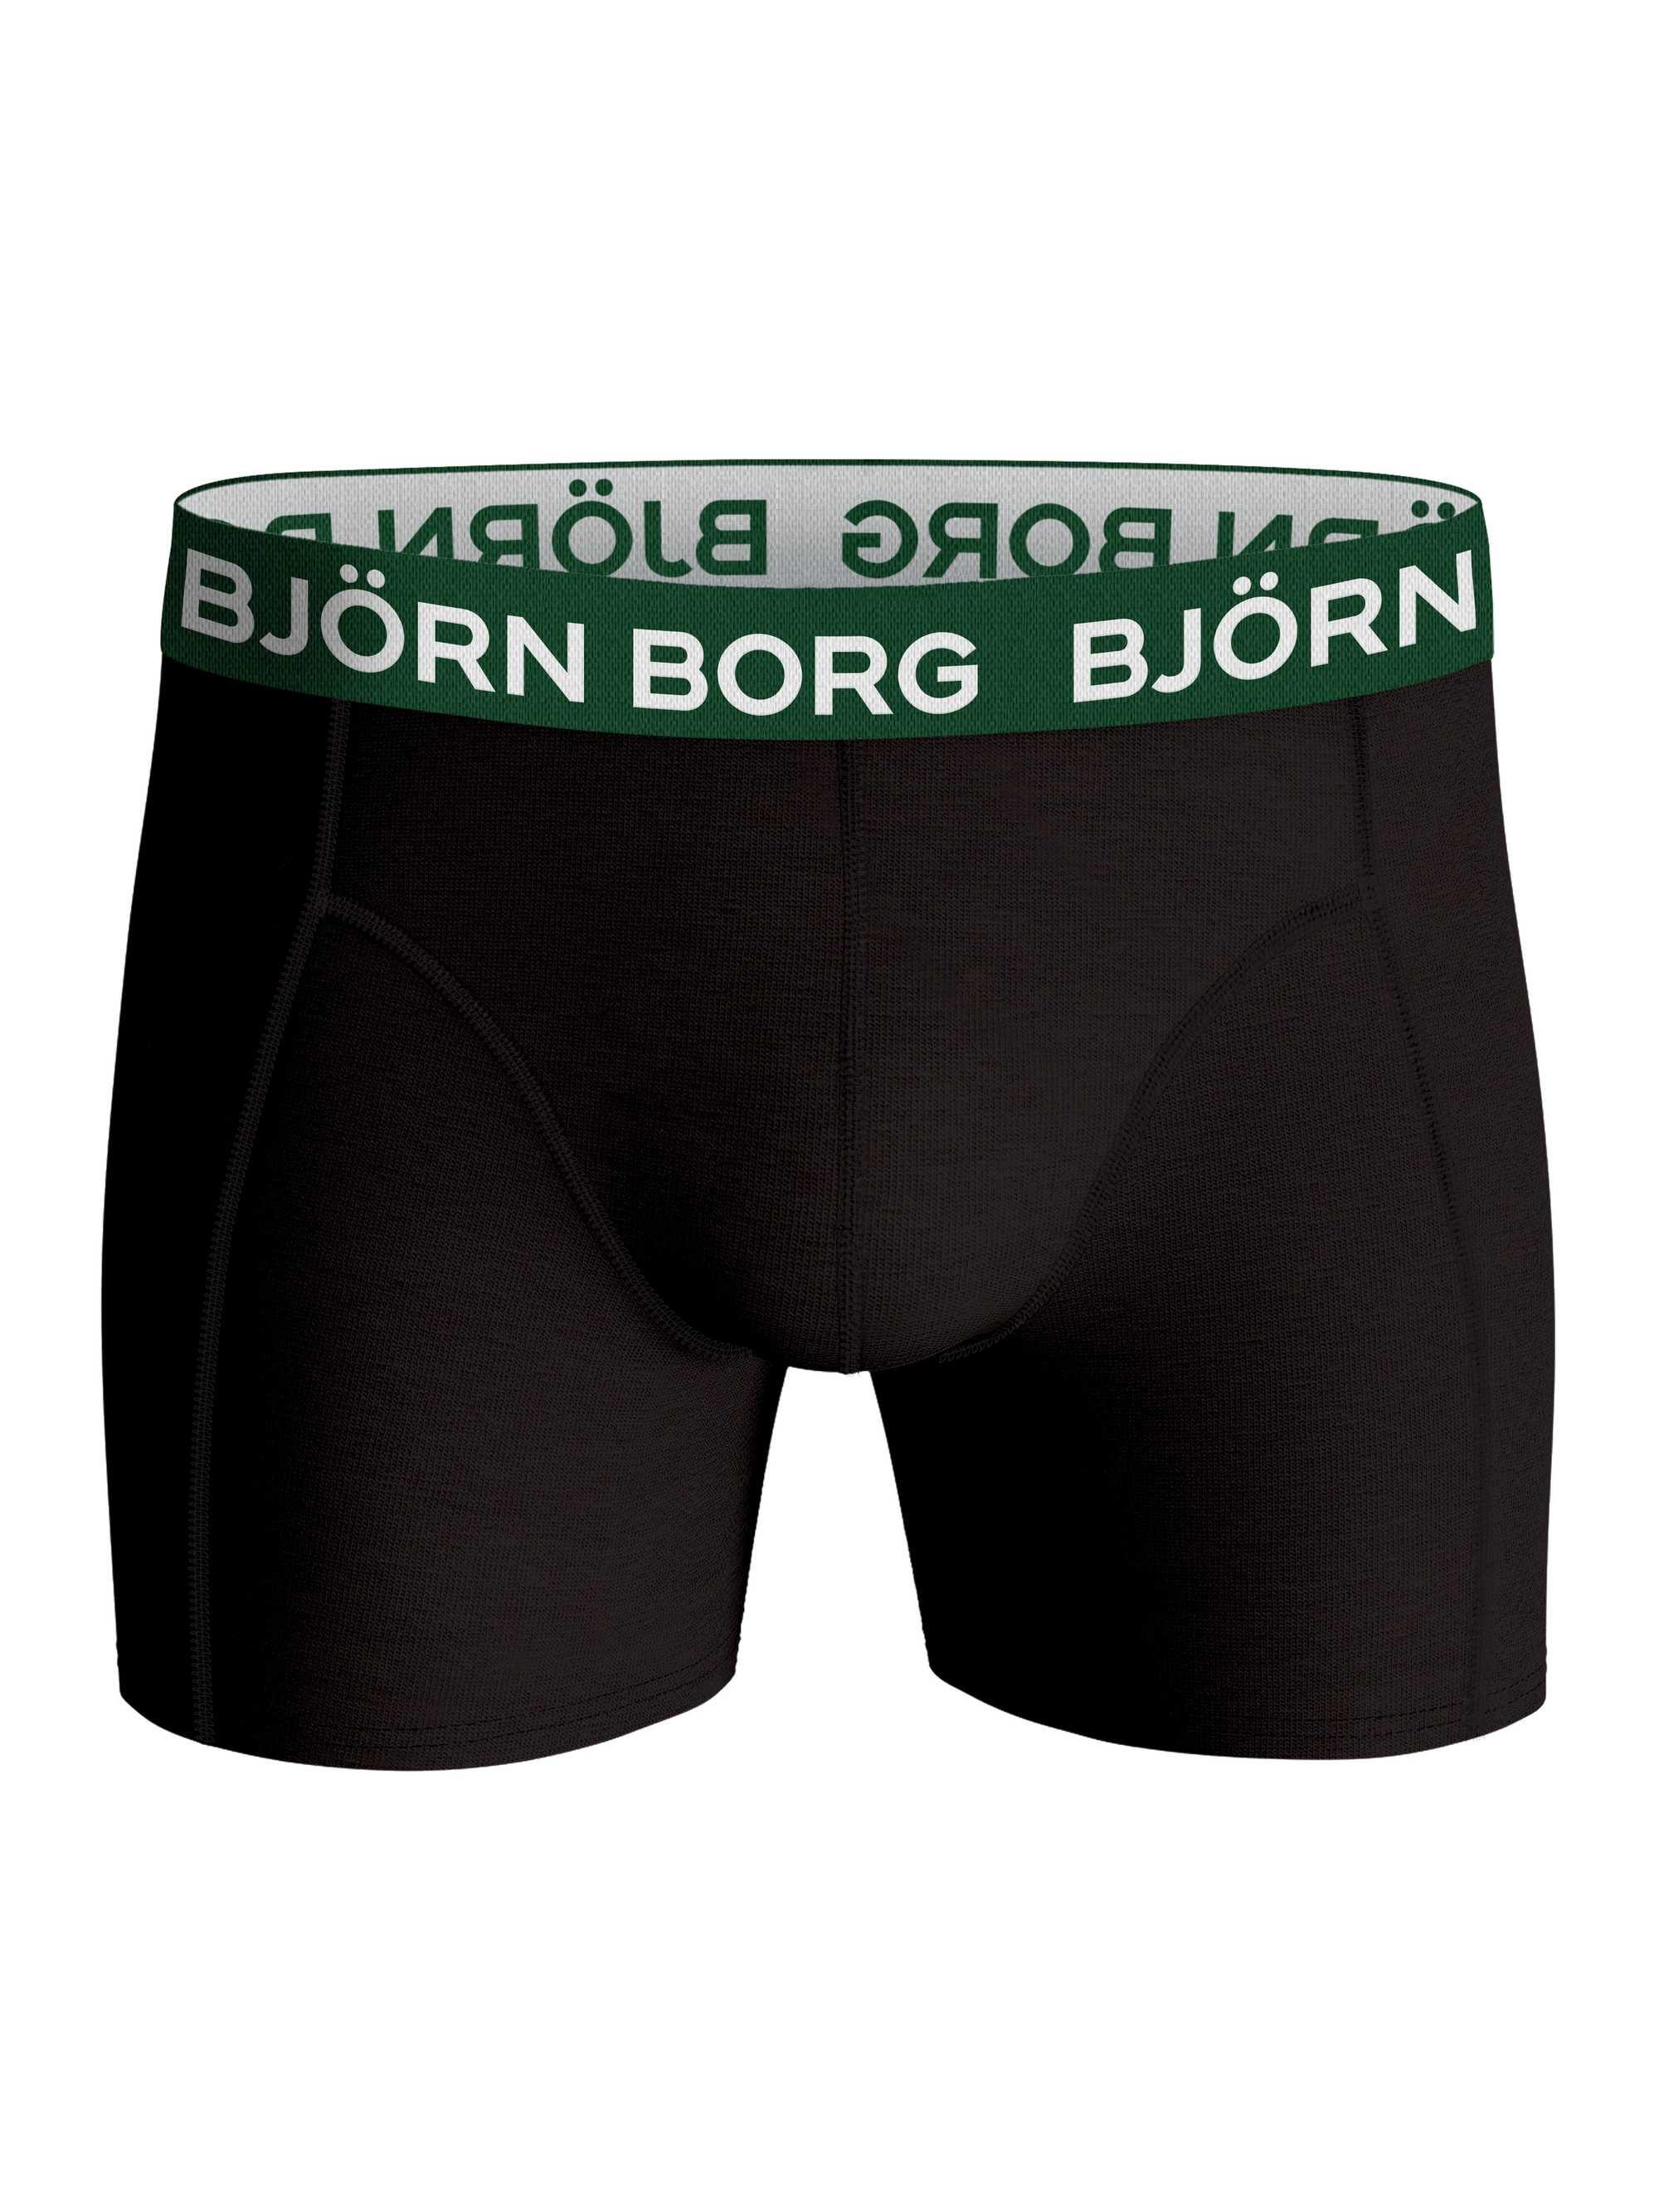 Björn Borg  Boxershort  Stretch 